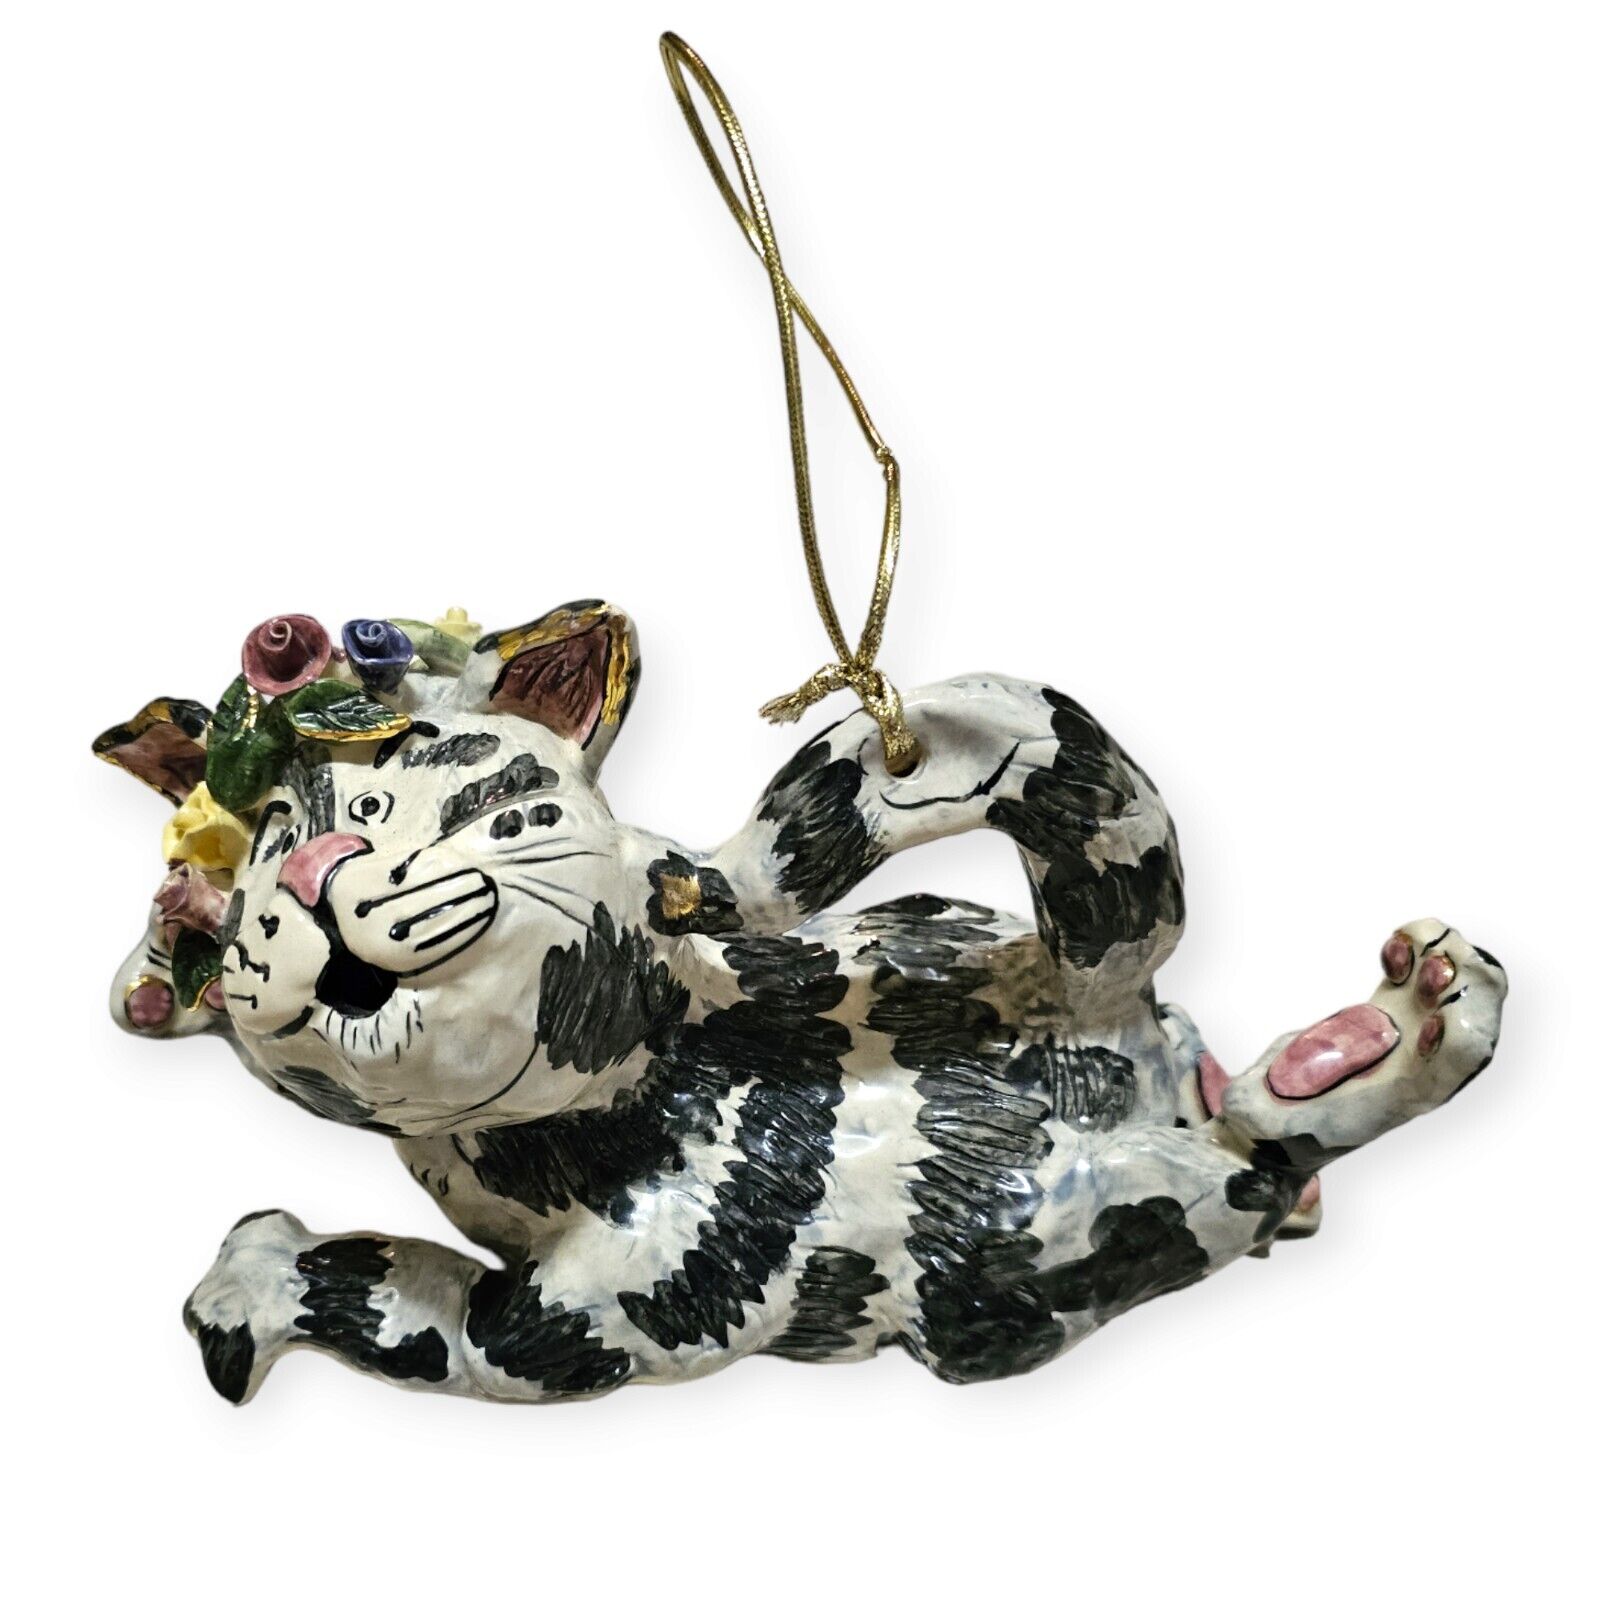 Vintage Heather Goldminc 2000 Ceramic Whimsical Cat With Gold Detailing.